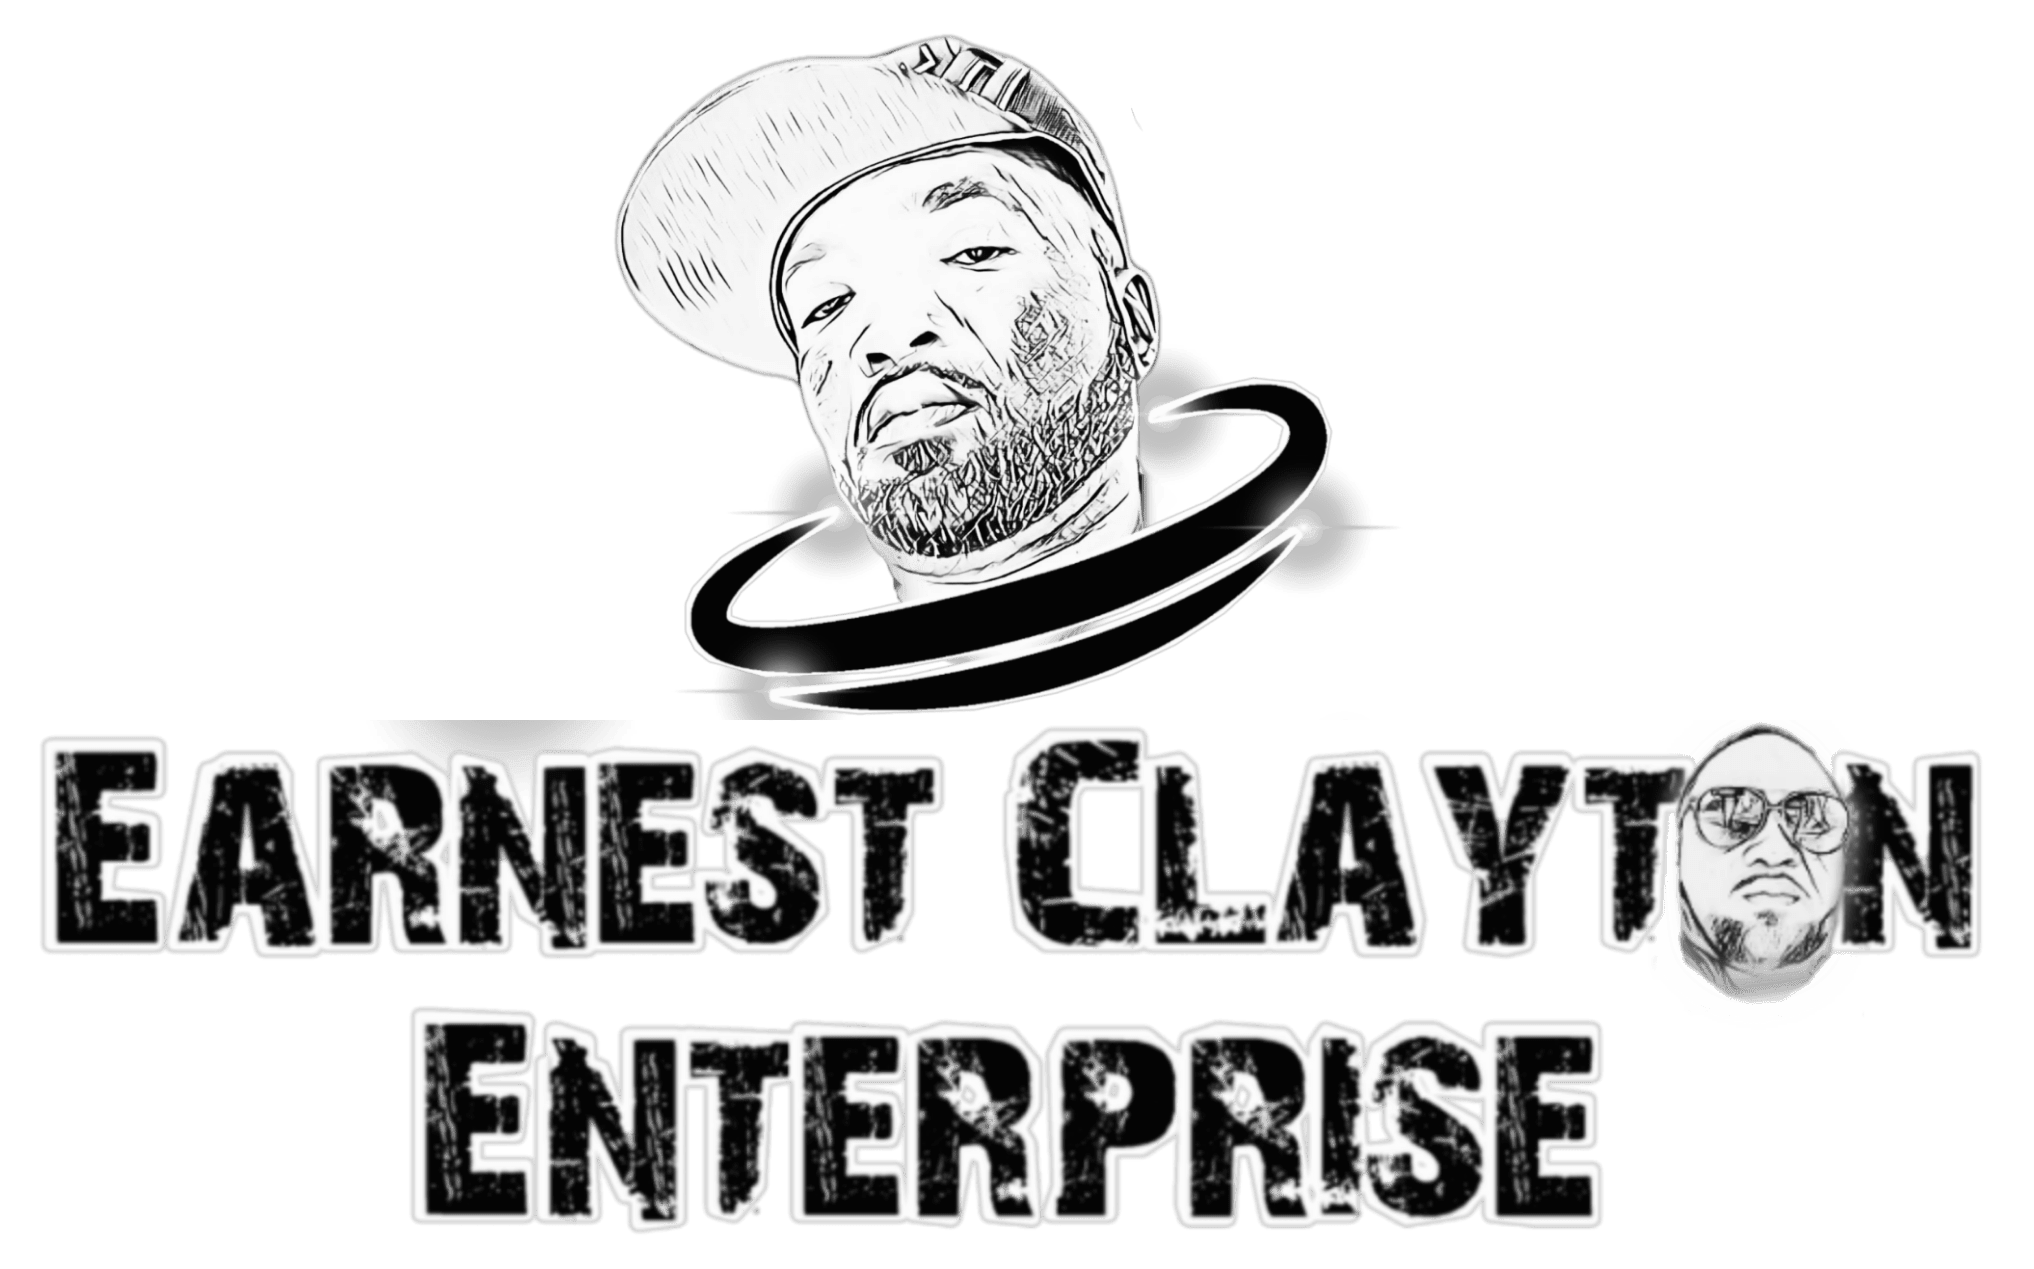 Earnest Clayton Enterprise